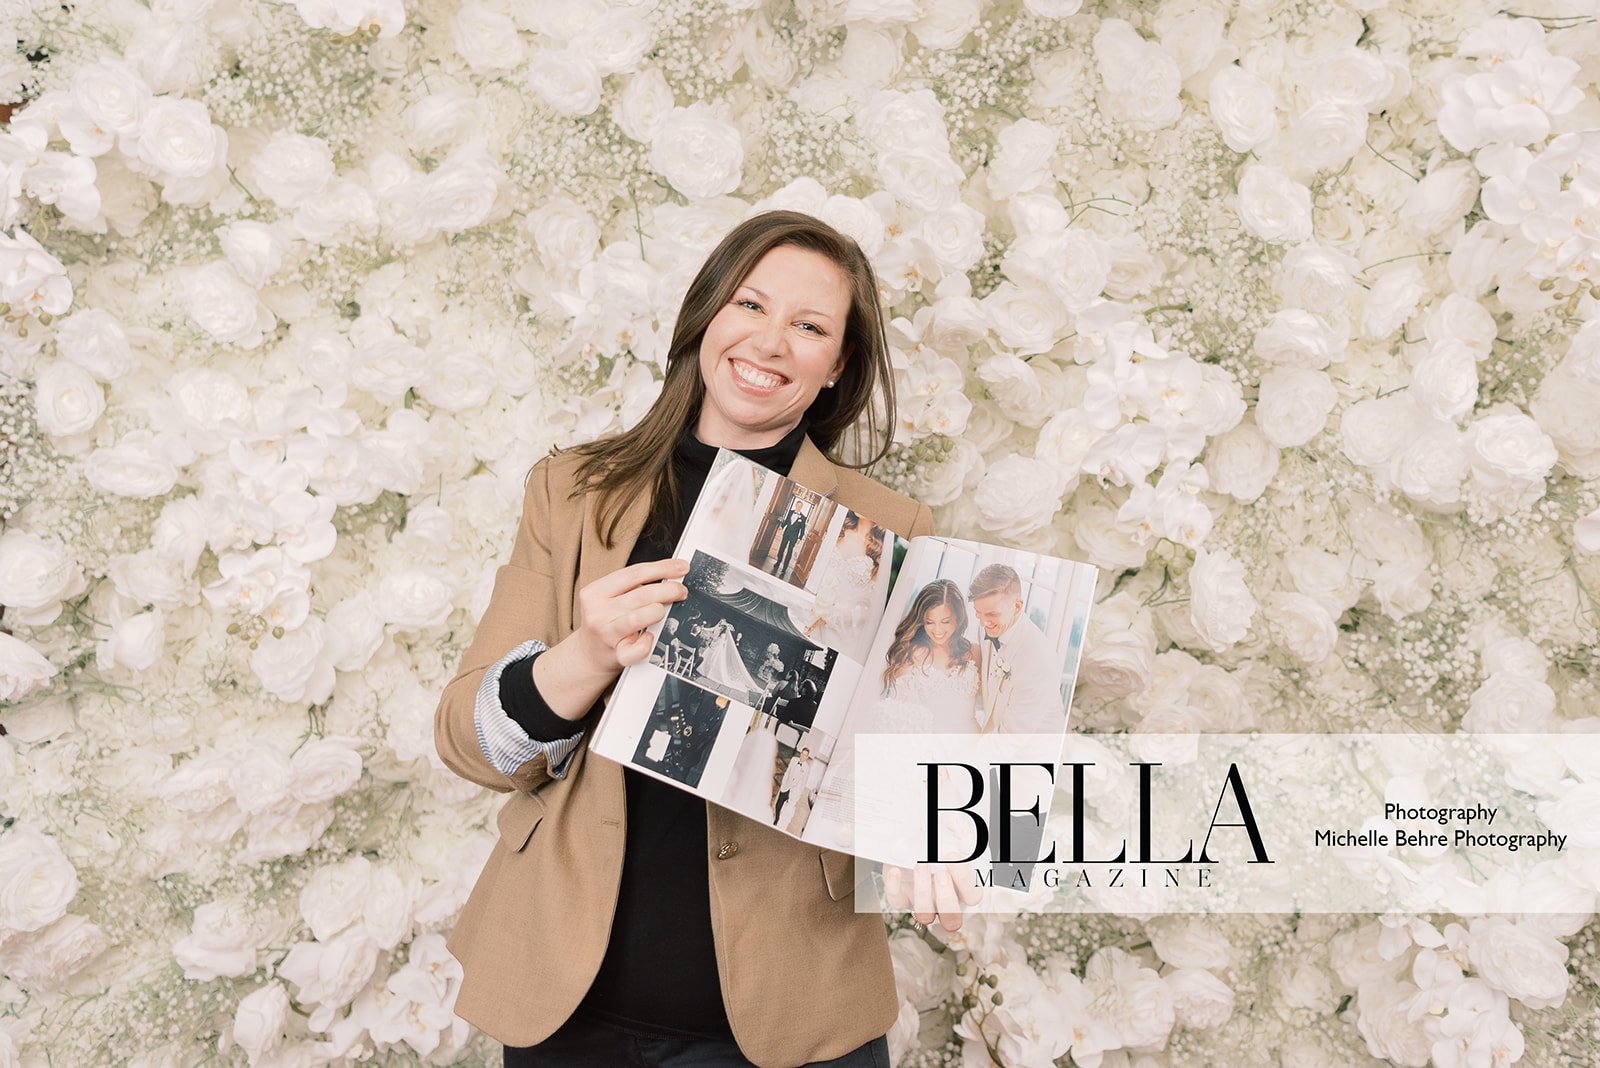 Michelle-Behre-Photography-BELLA-Magazine-Wedding-Event-La-Pulperia-New-York-117.jpg